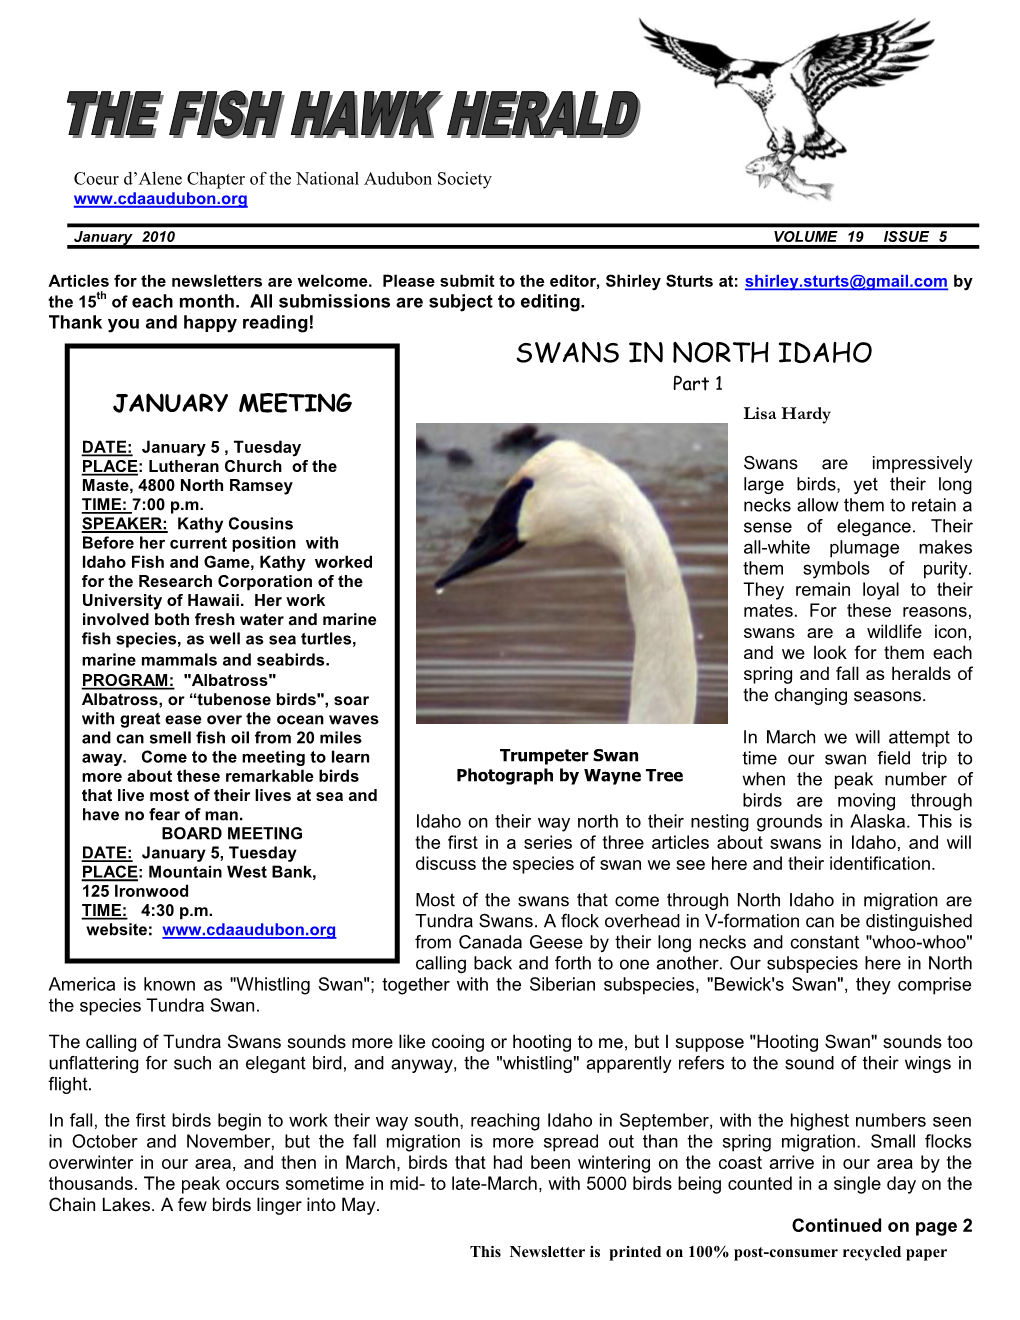 SWANS in NORTH IDAHO Part 1 JANUARY MEETING Lisa Hardy